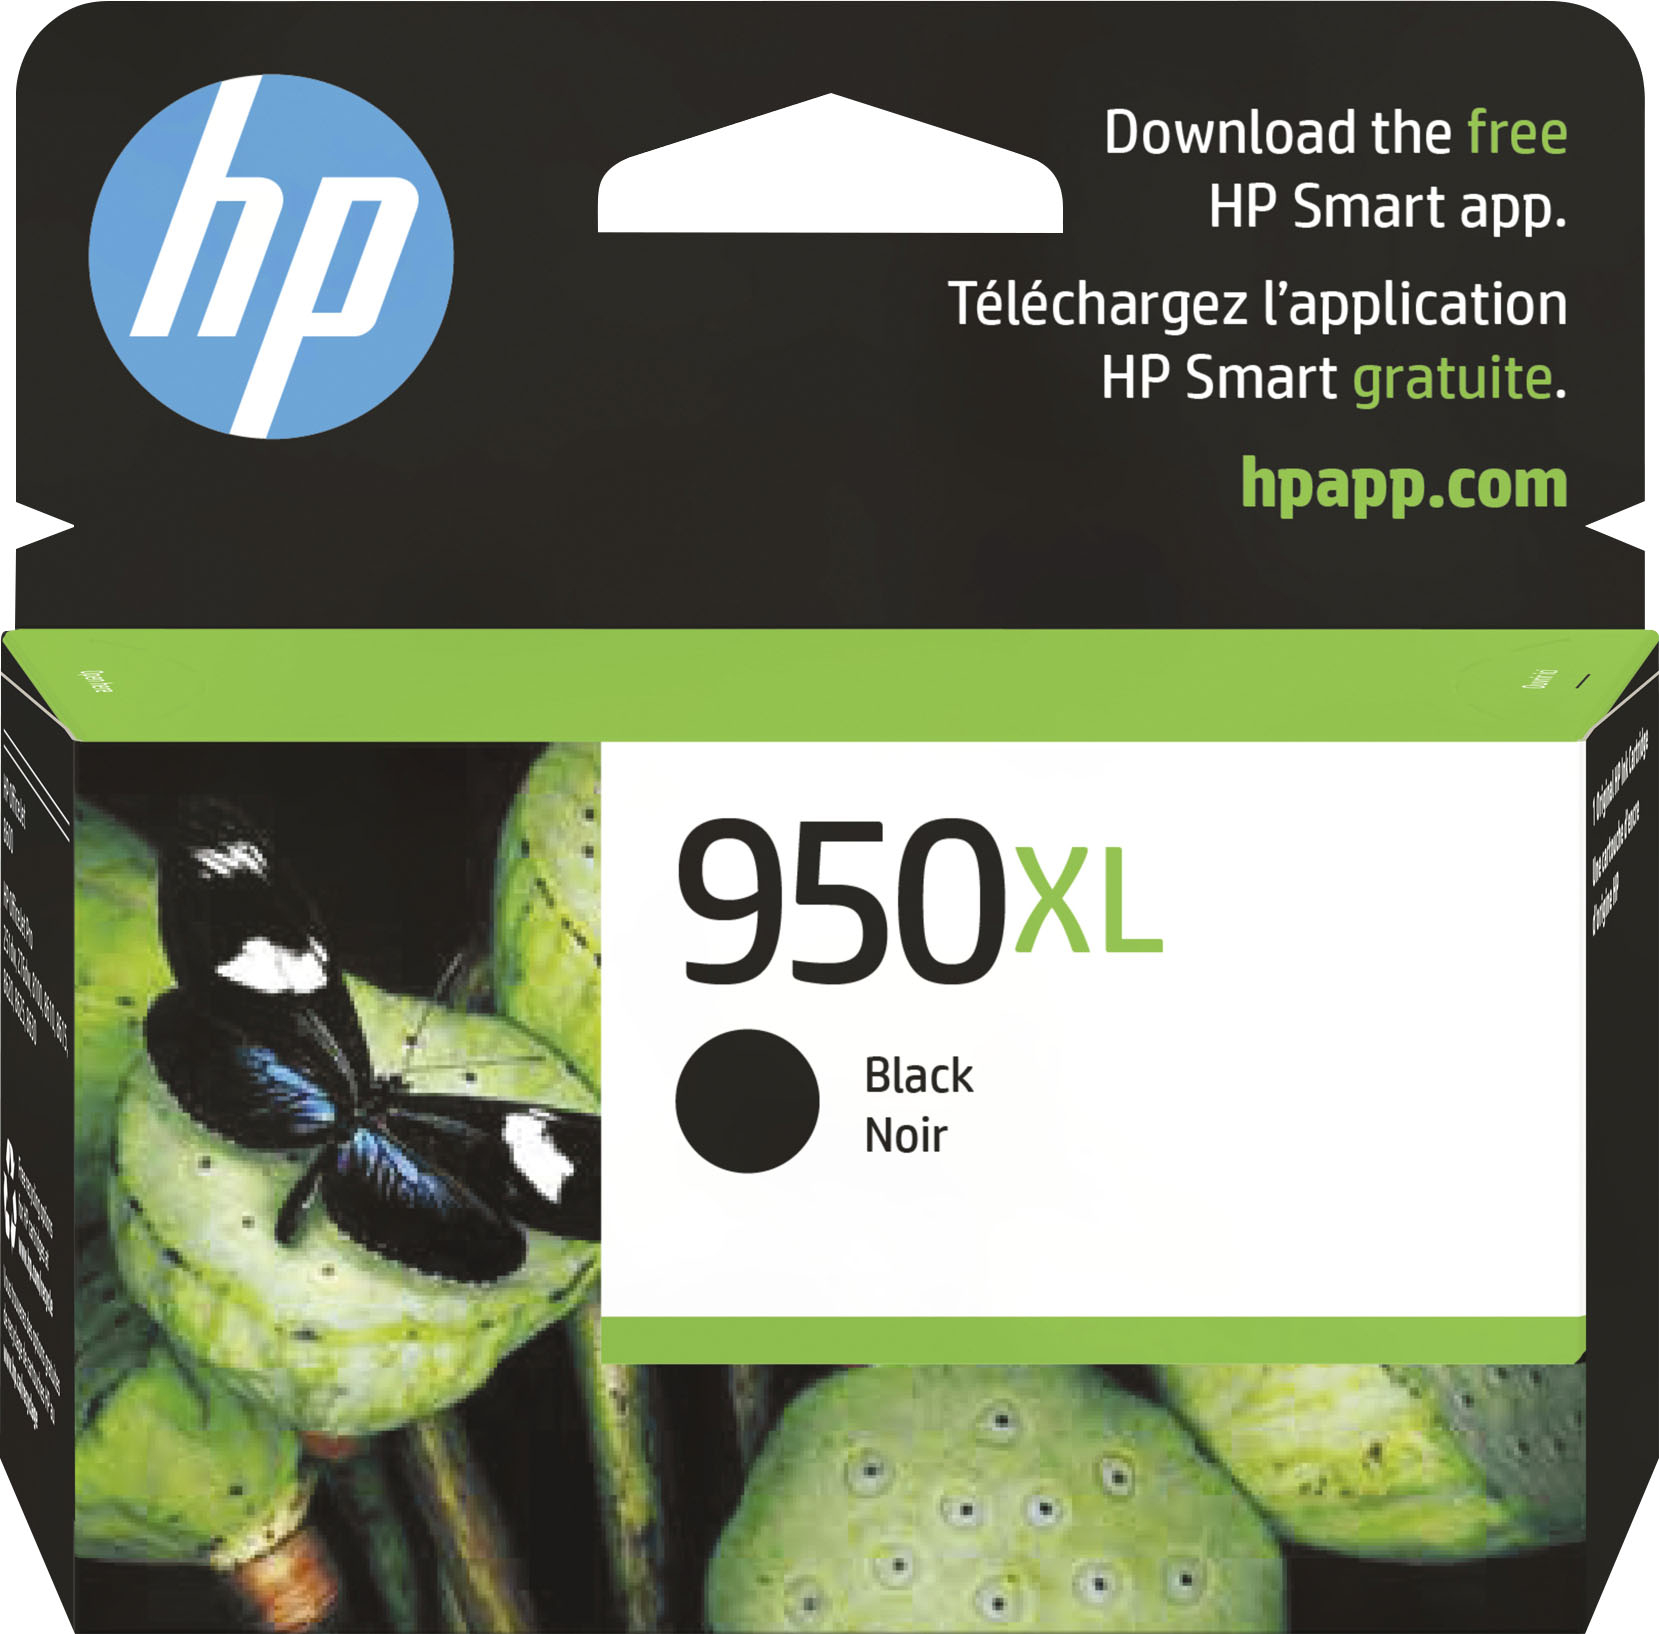 HP 950XL High Yield Black/951 Standard Tri-Color Ink Cartridges